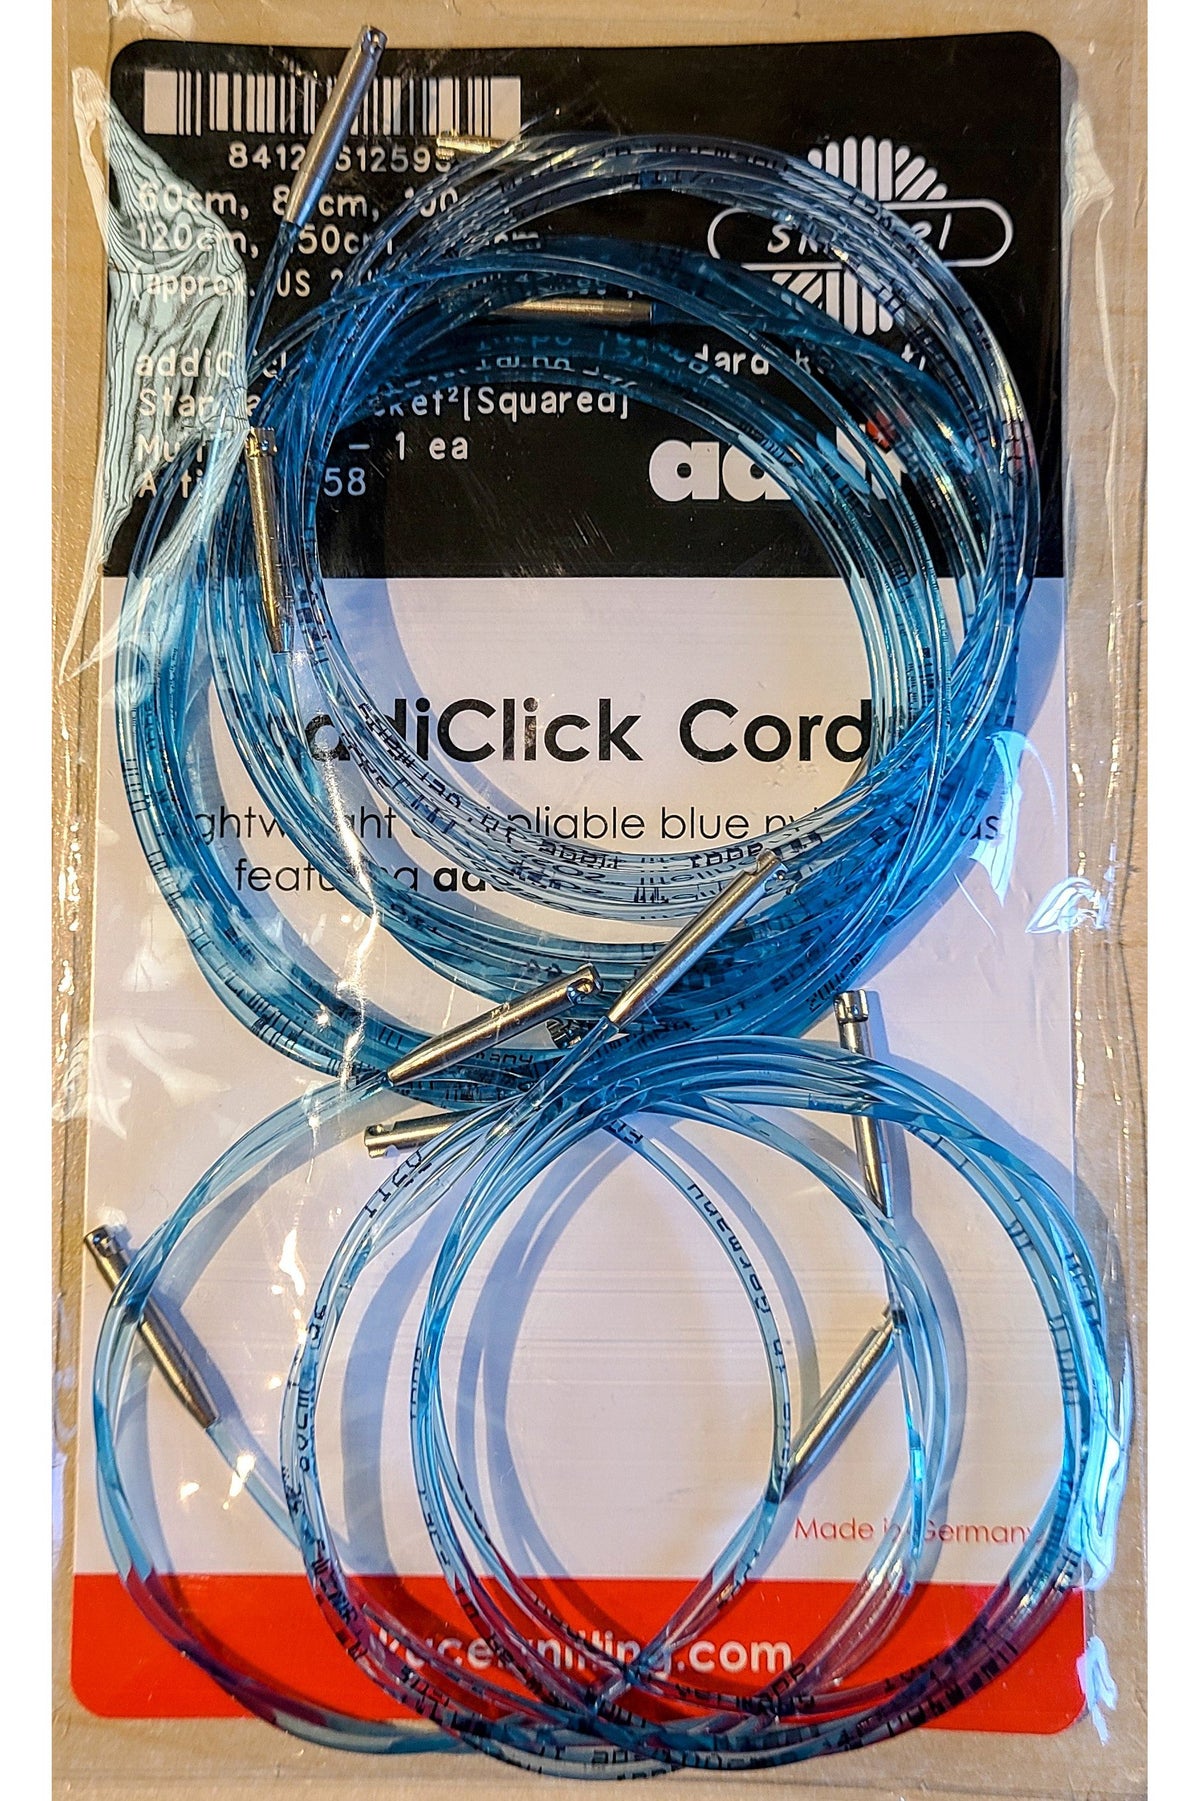 Extra addiClick Cords